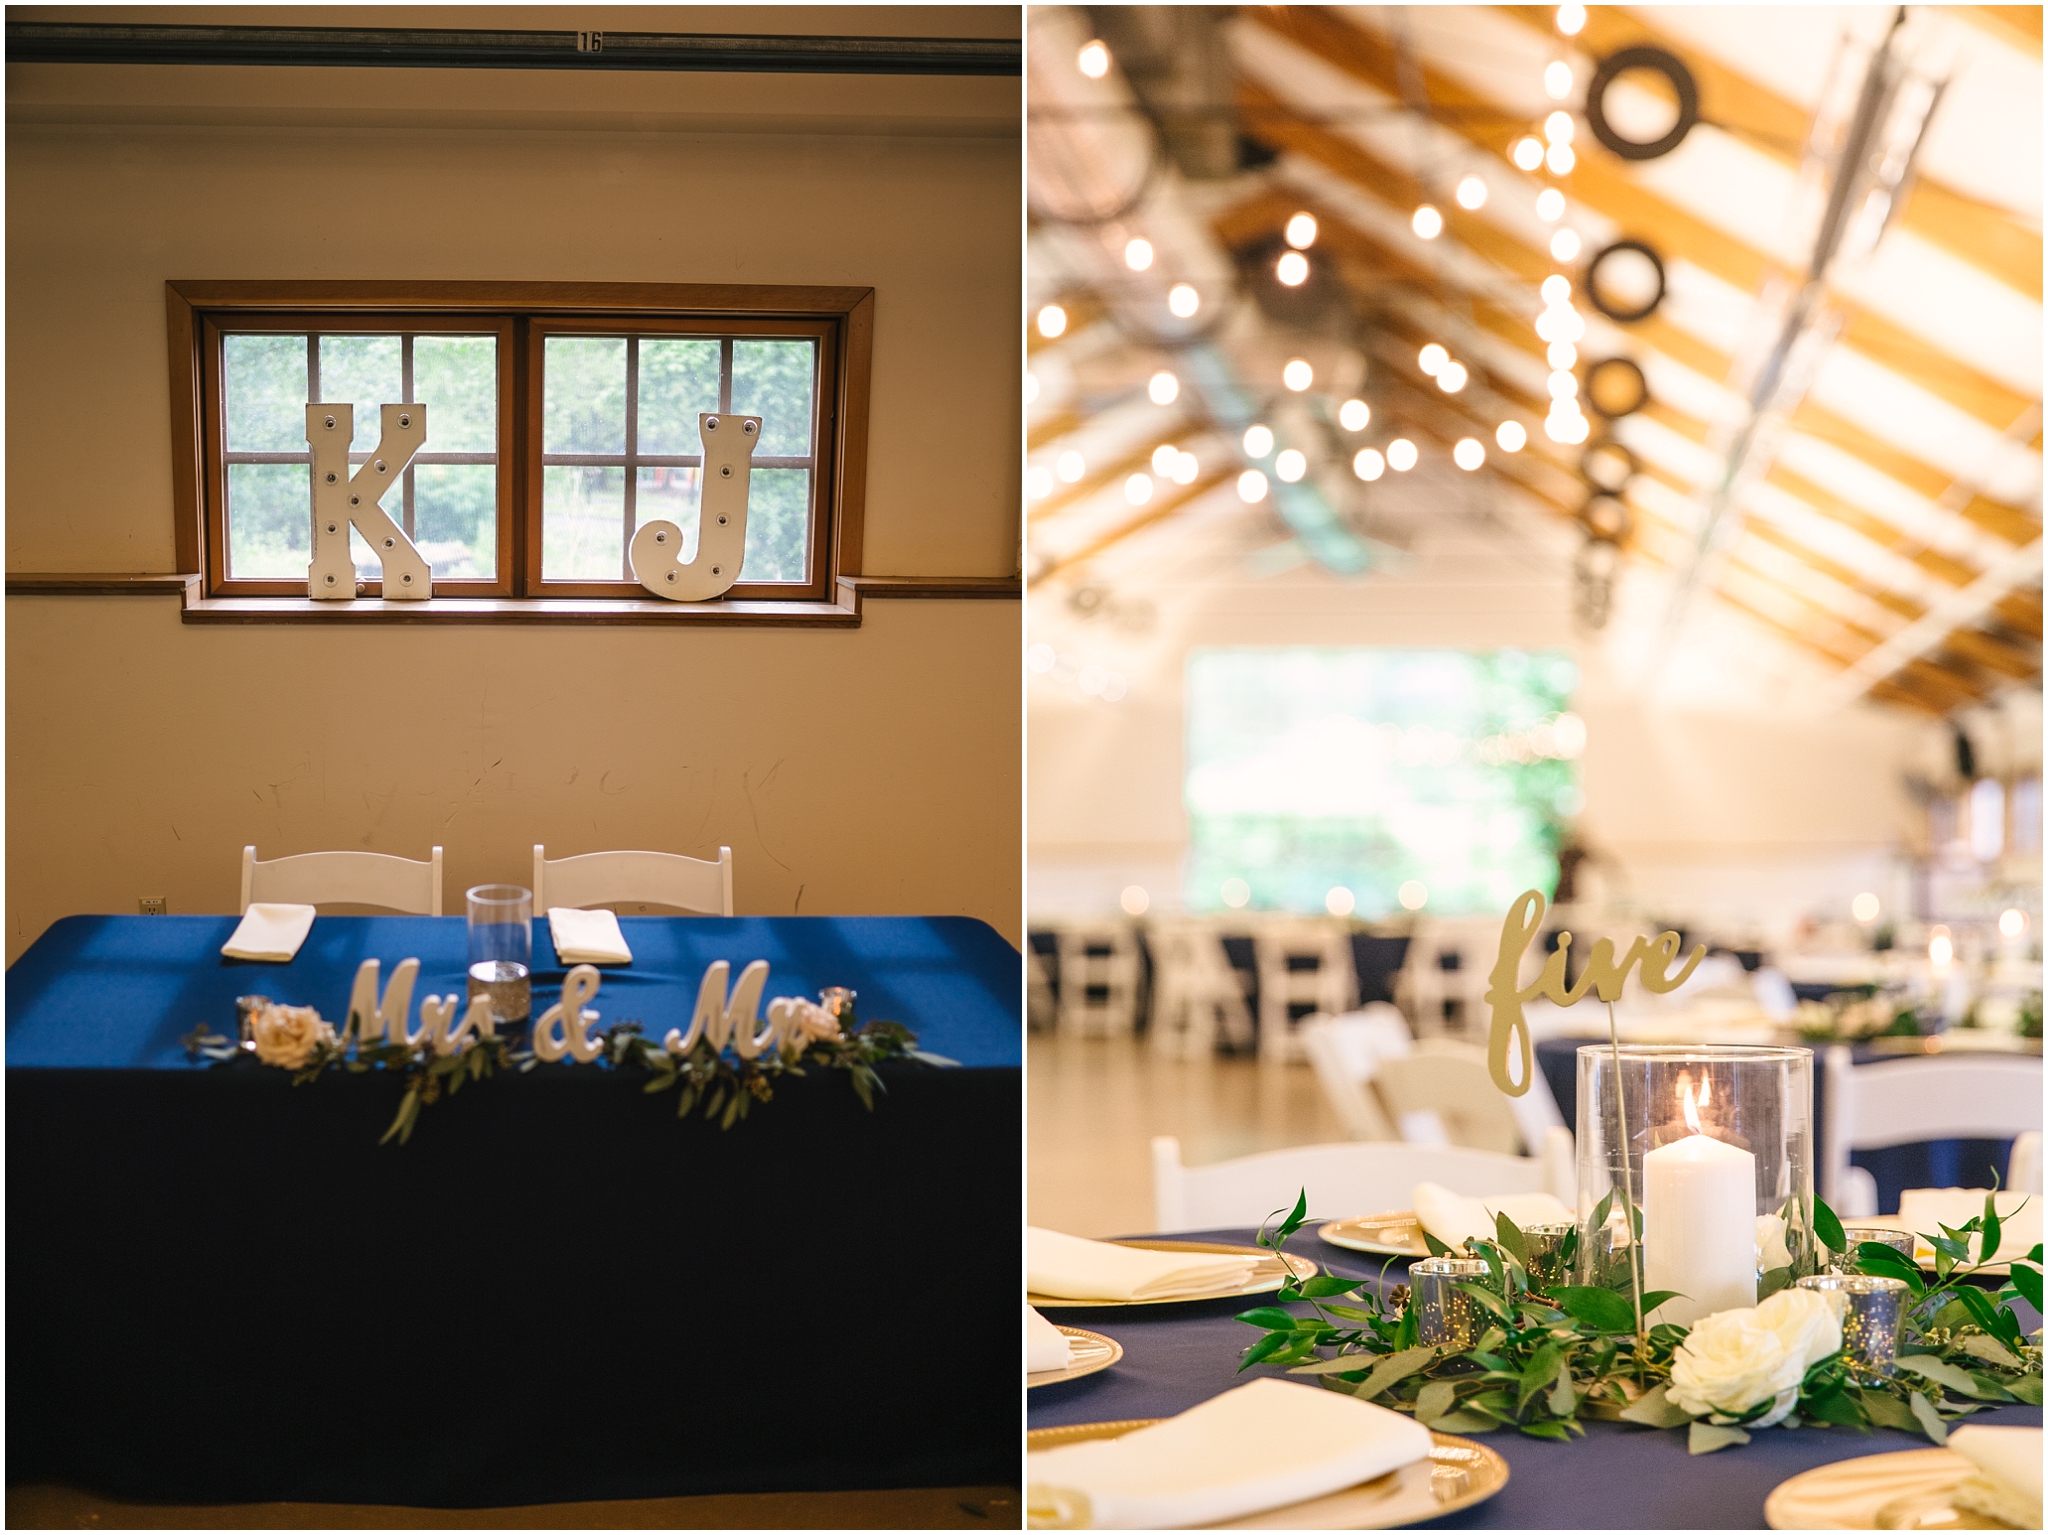 Pickering Barn wedding reception details in Issaquah Washington